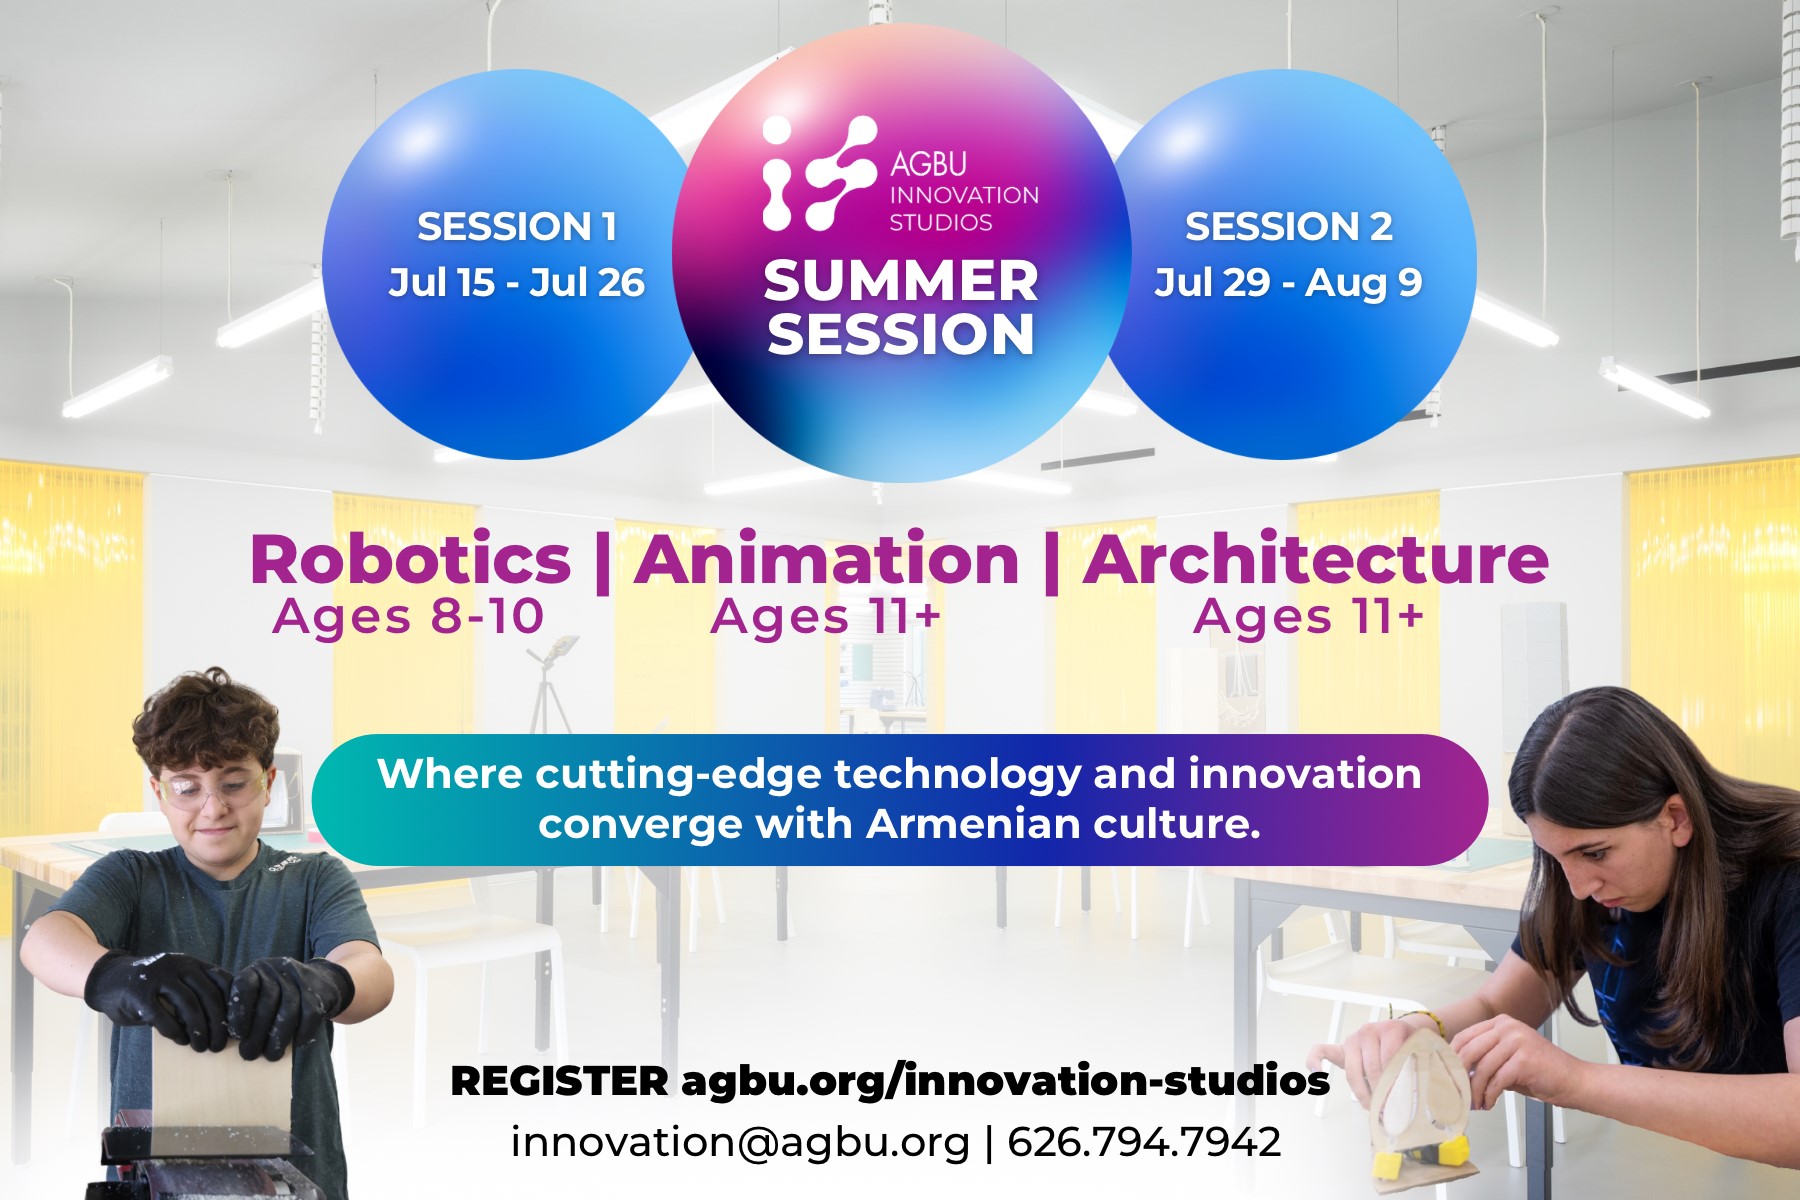 AGBU Innovation Studios Summer Session